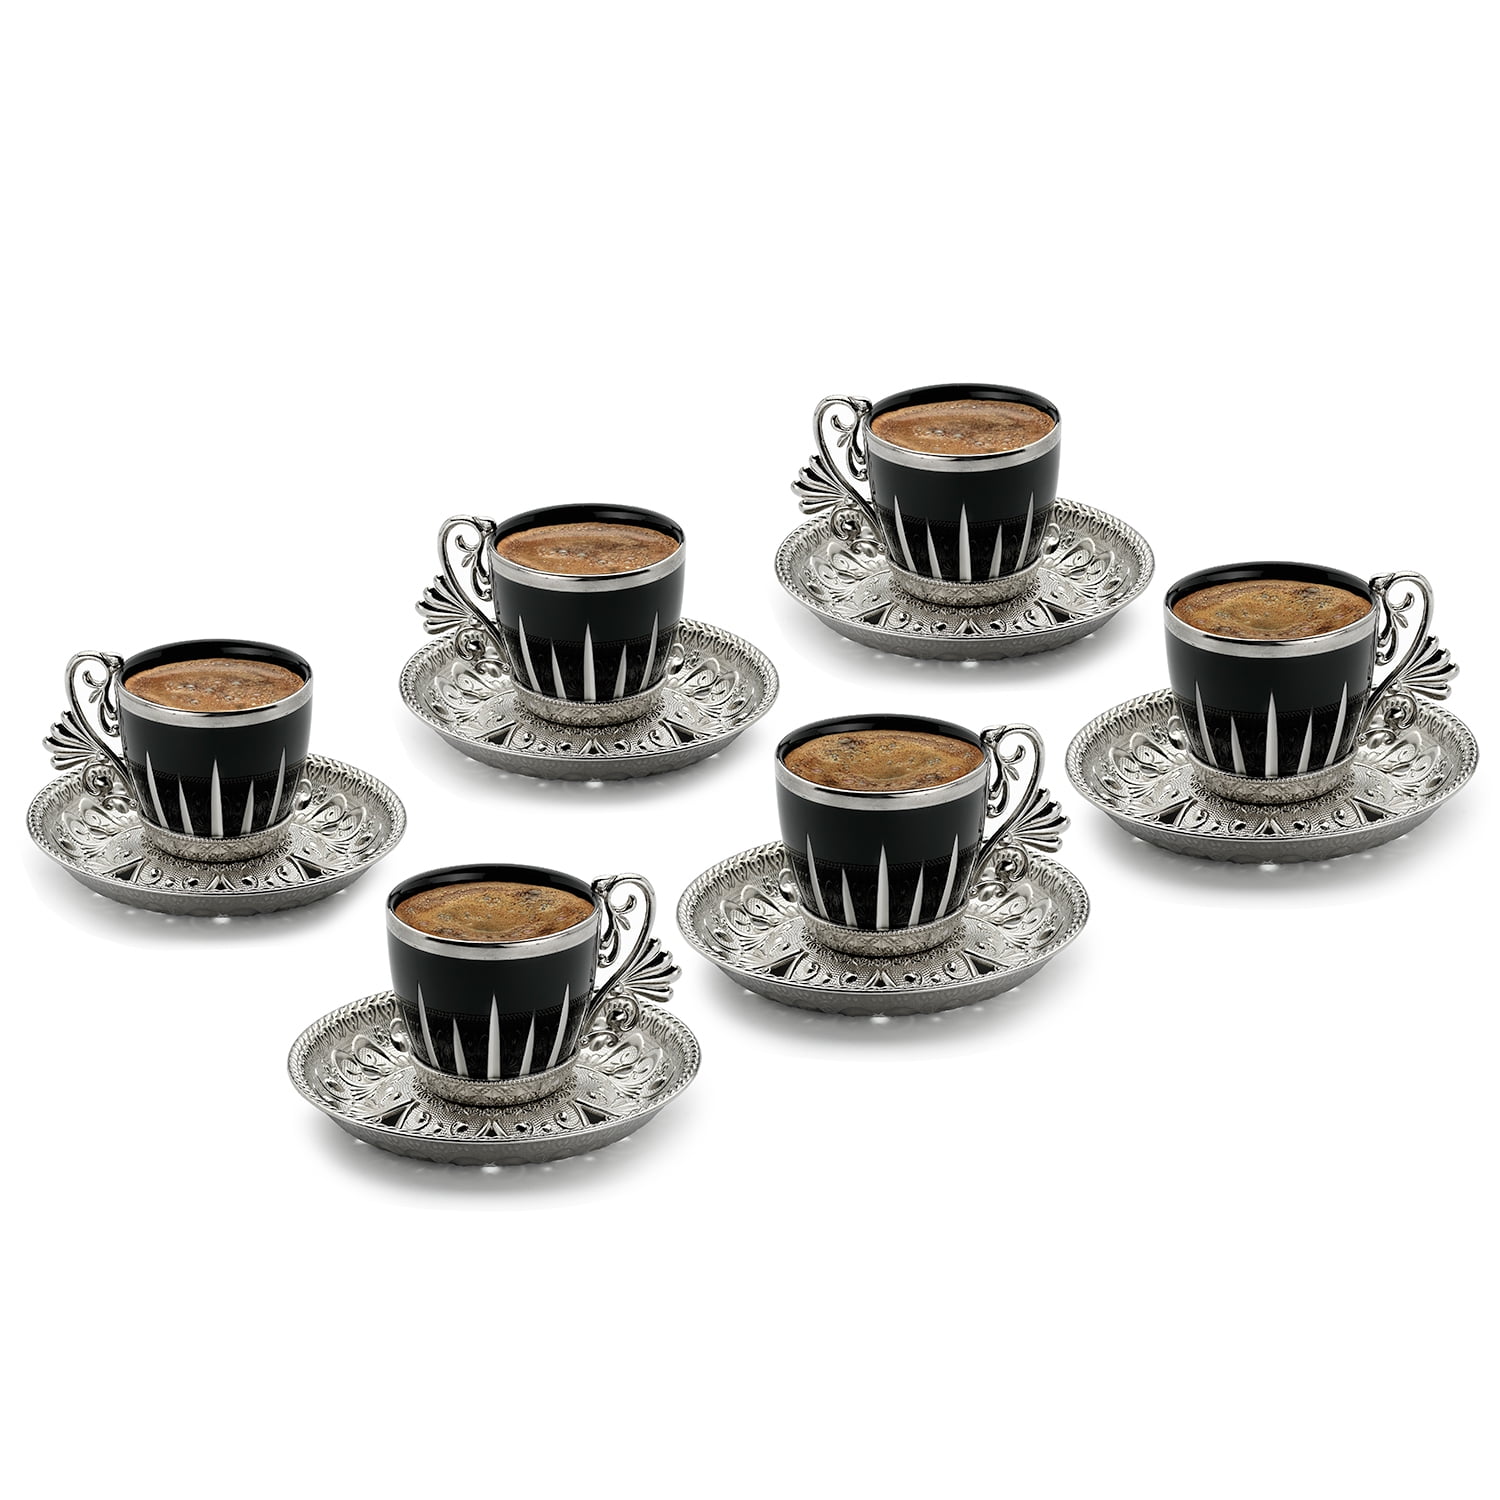 Turkey Espresso Summer Tea Cup Set Transparent Teacup And Saucer Coffee Mug  Simple Reusable Chavenas De Cafe Coffee Cup Set - Cups & Saucers -  AliExpress